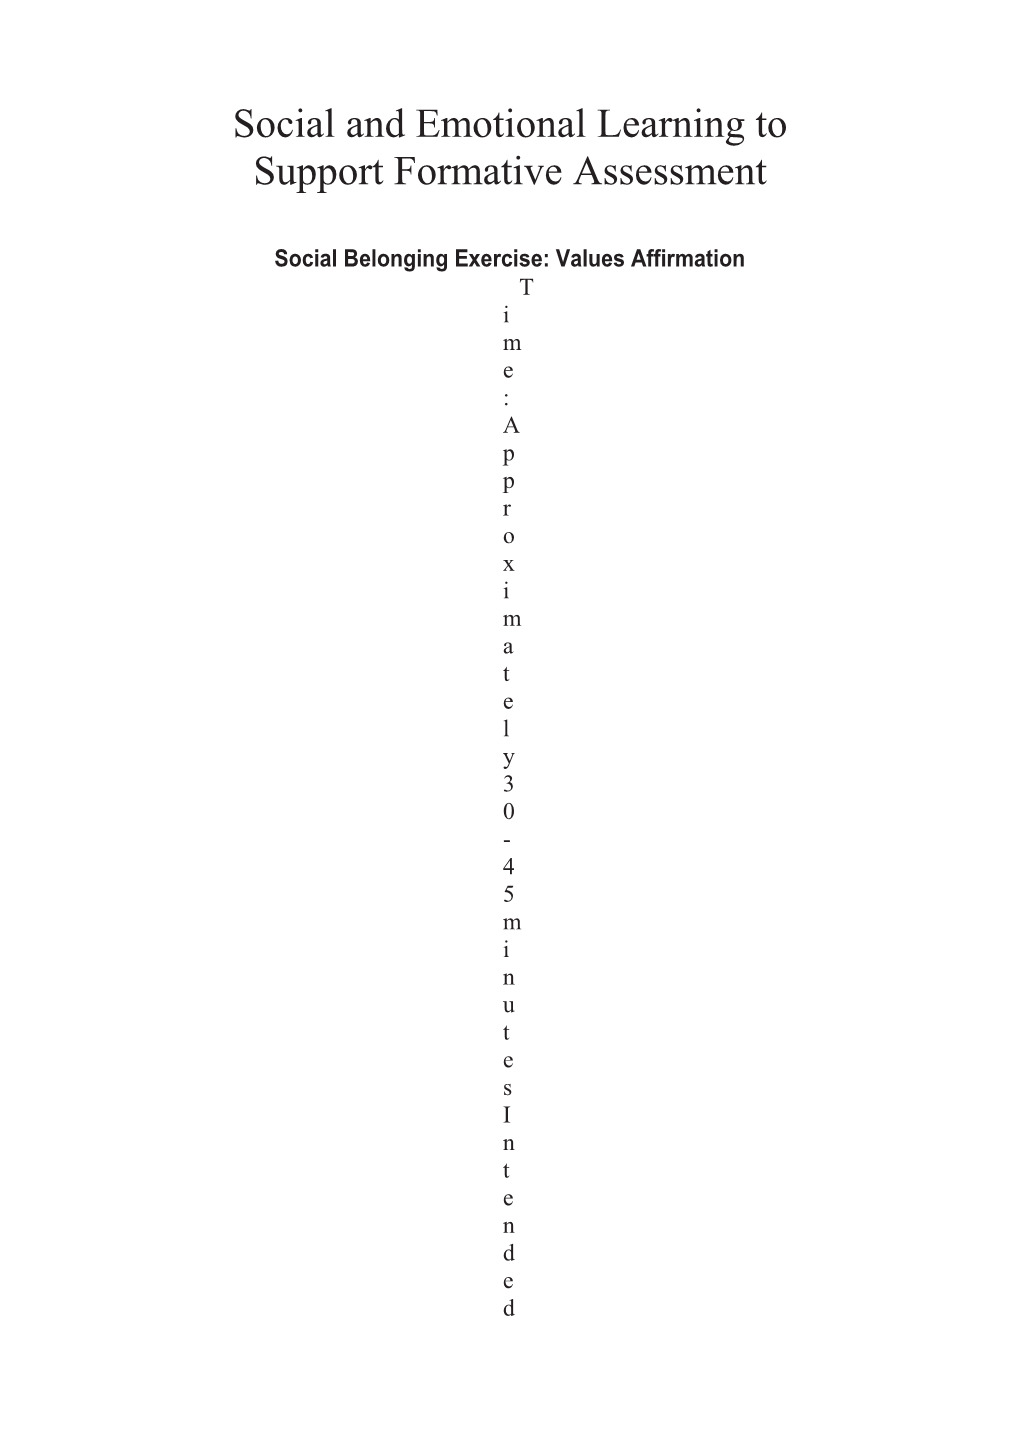 Social Belonging - Values Affirmation Exercise Instructions